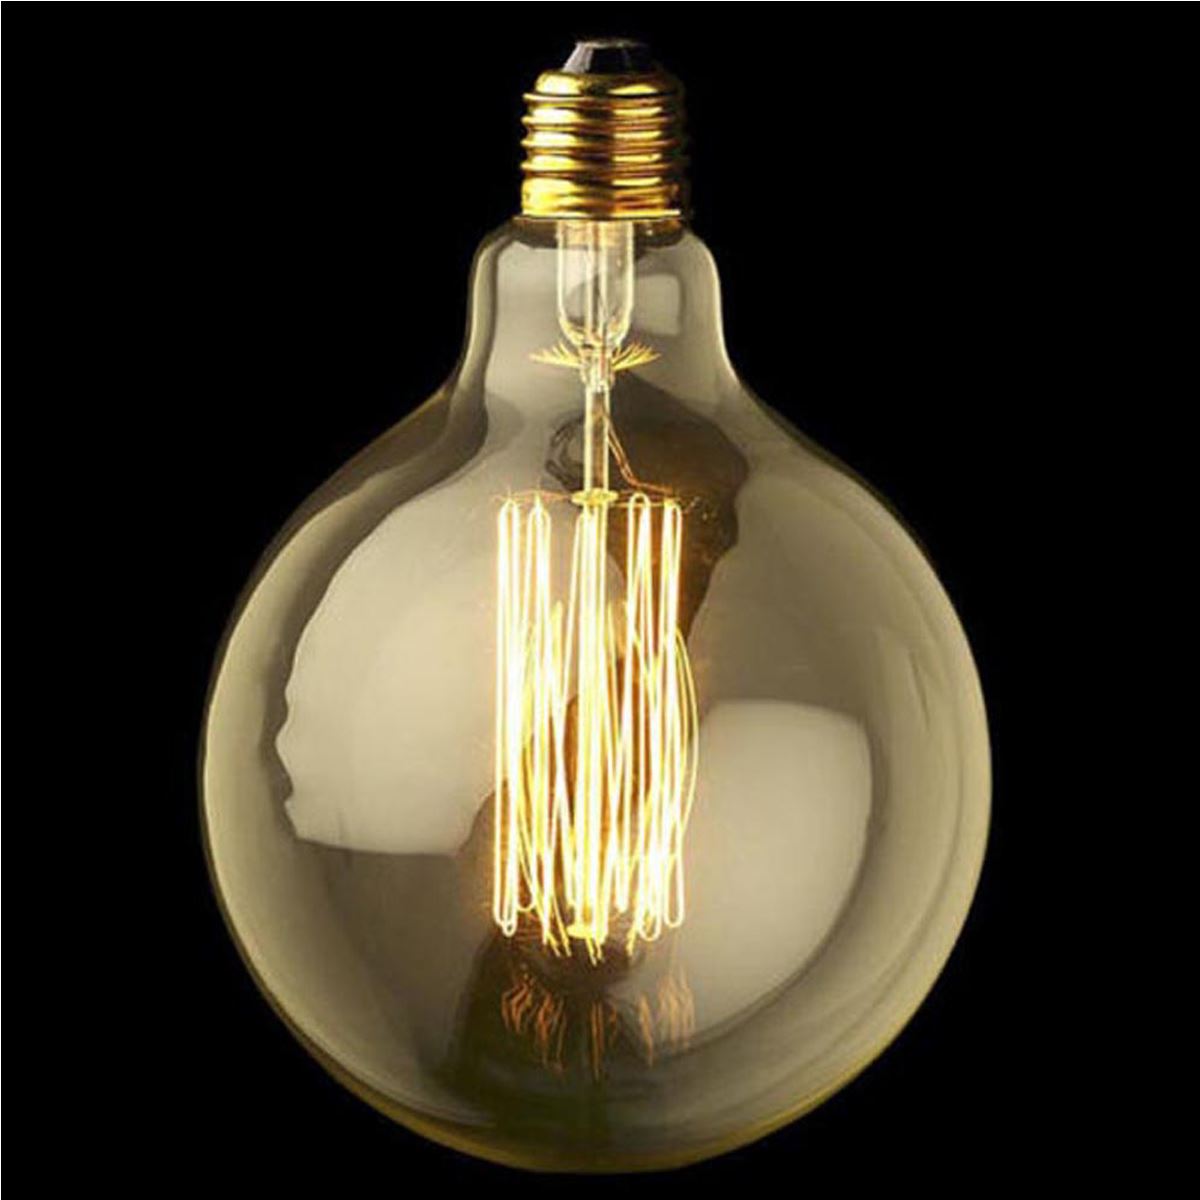 E27 Industrial Antique Style Light Bulb